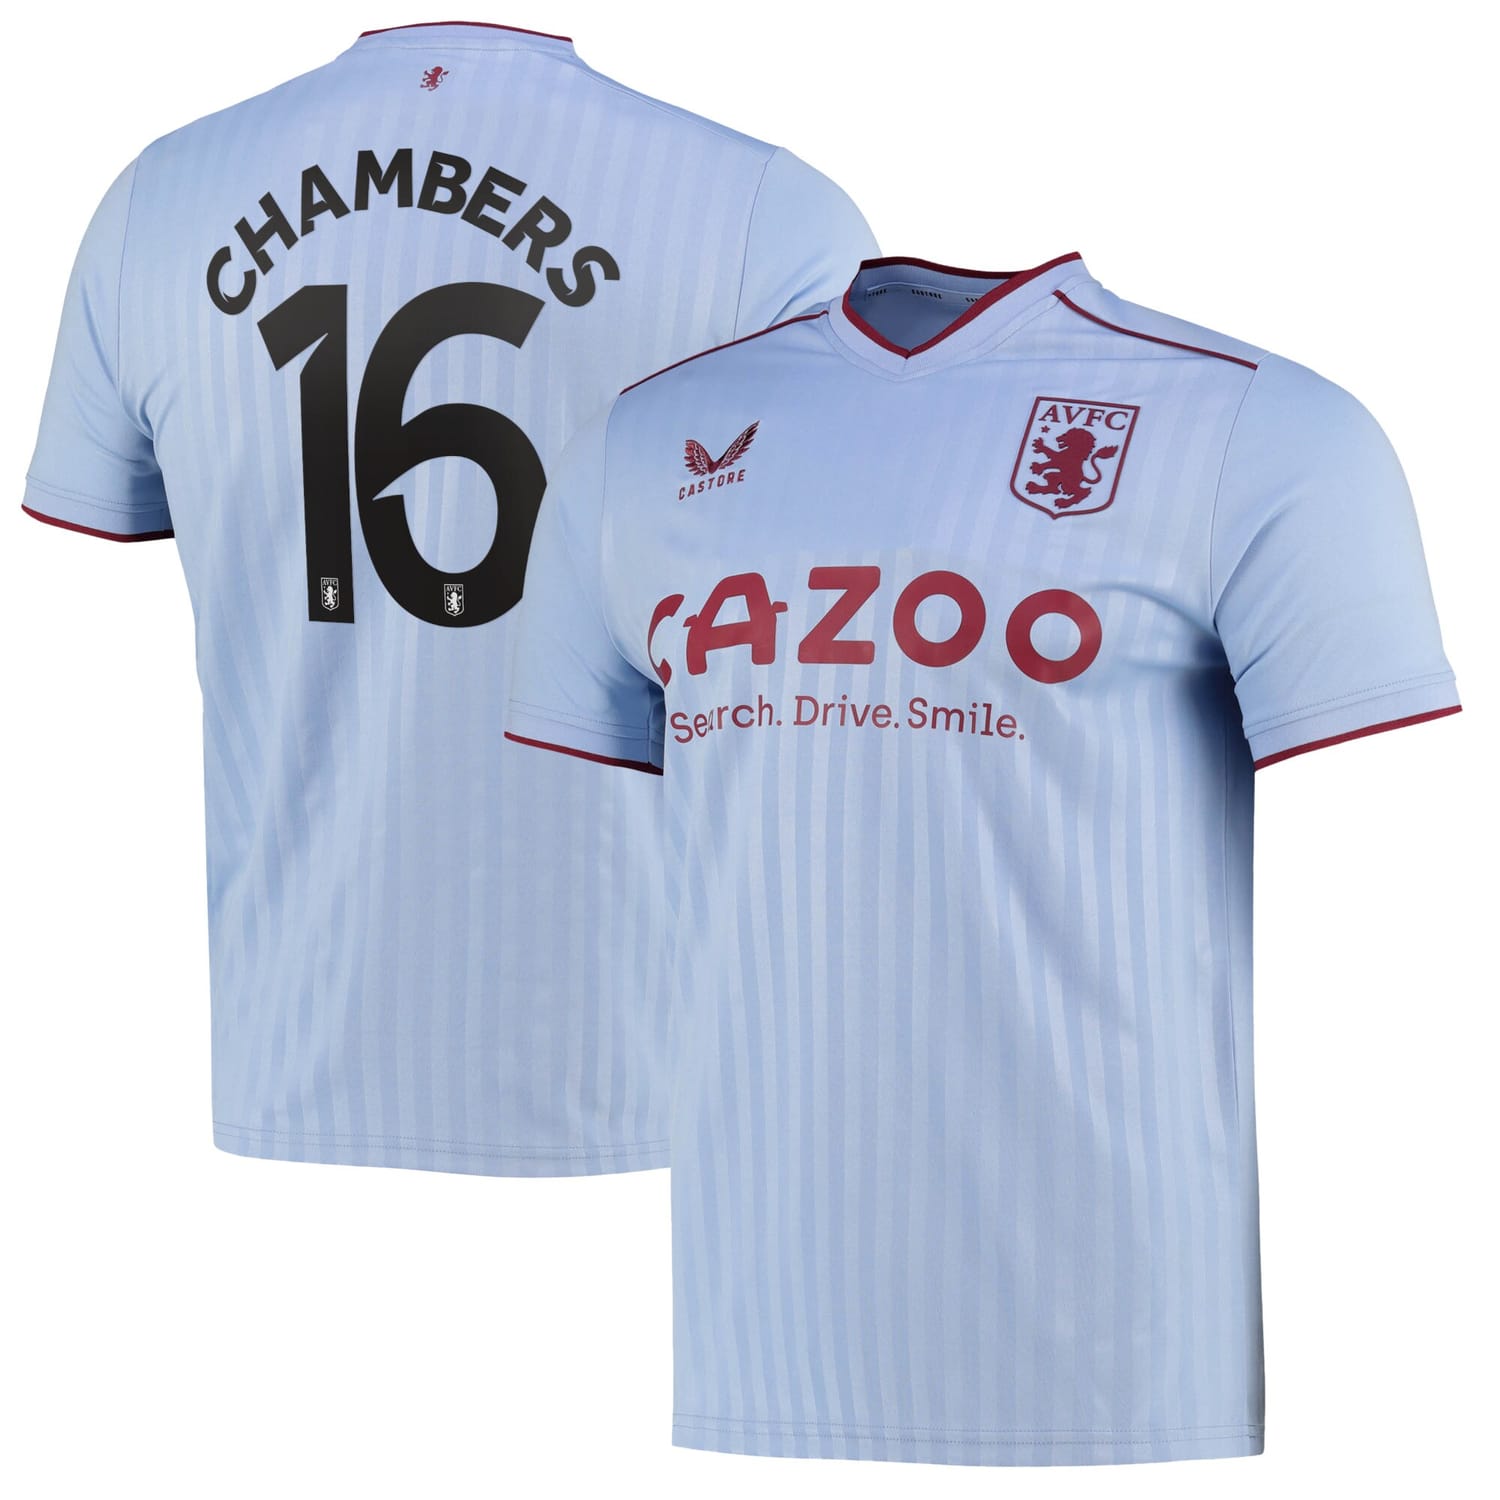 Premier League Aston Villa Away Cup Jersey Shirt 2022-23 player Calum Chambers 16 printing for Men